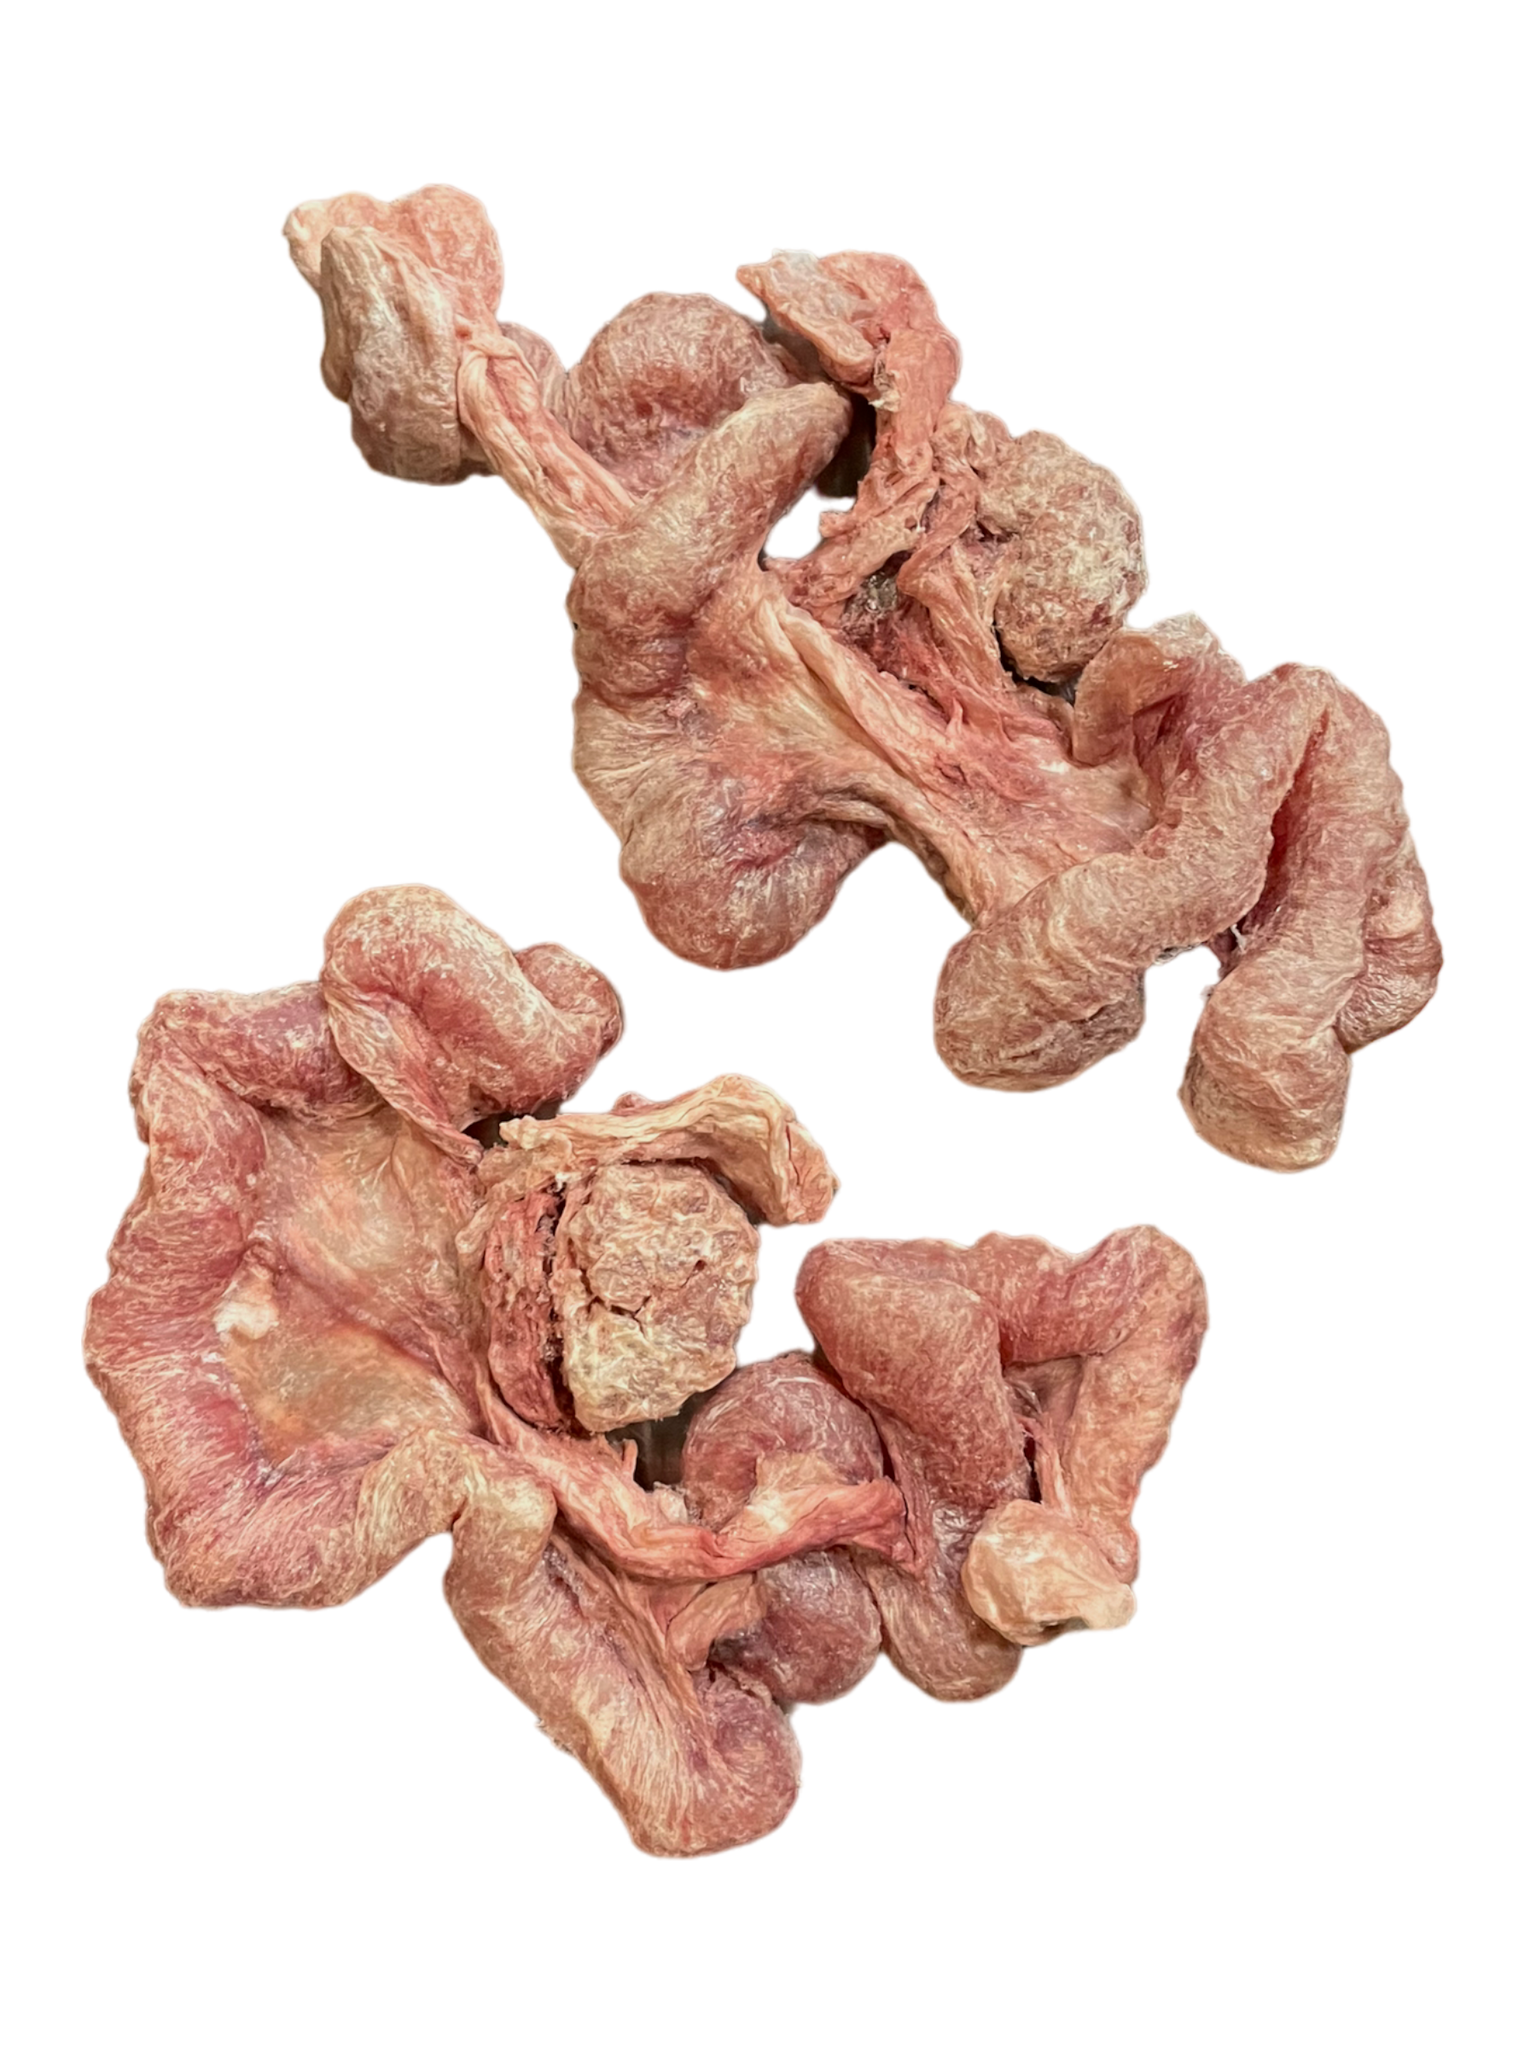 Freeze Dried Pork Uterus